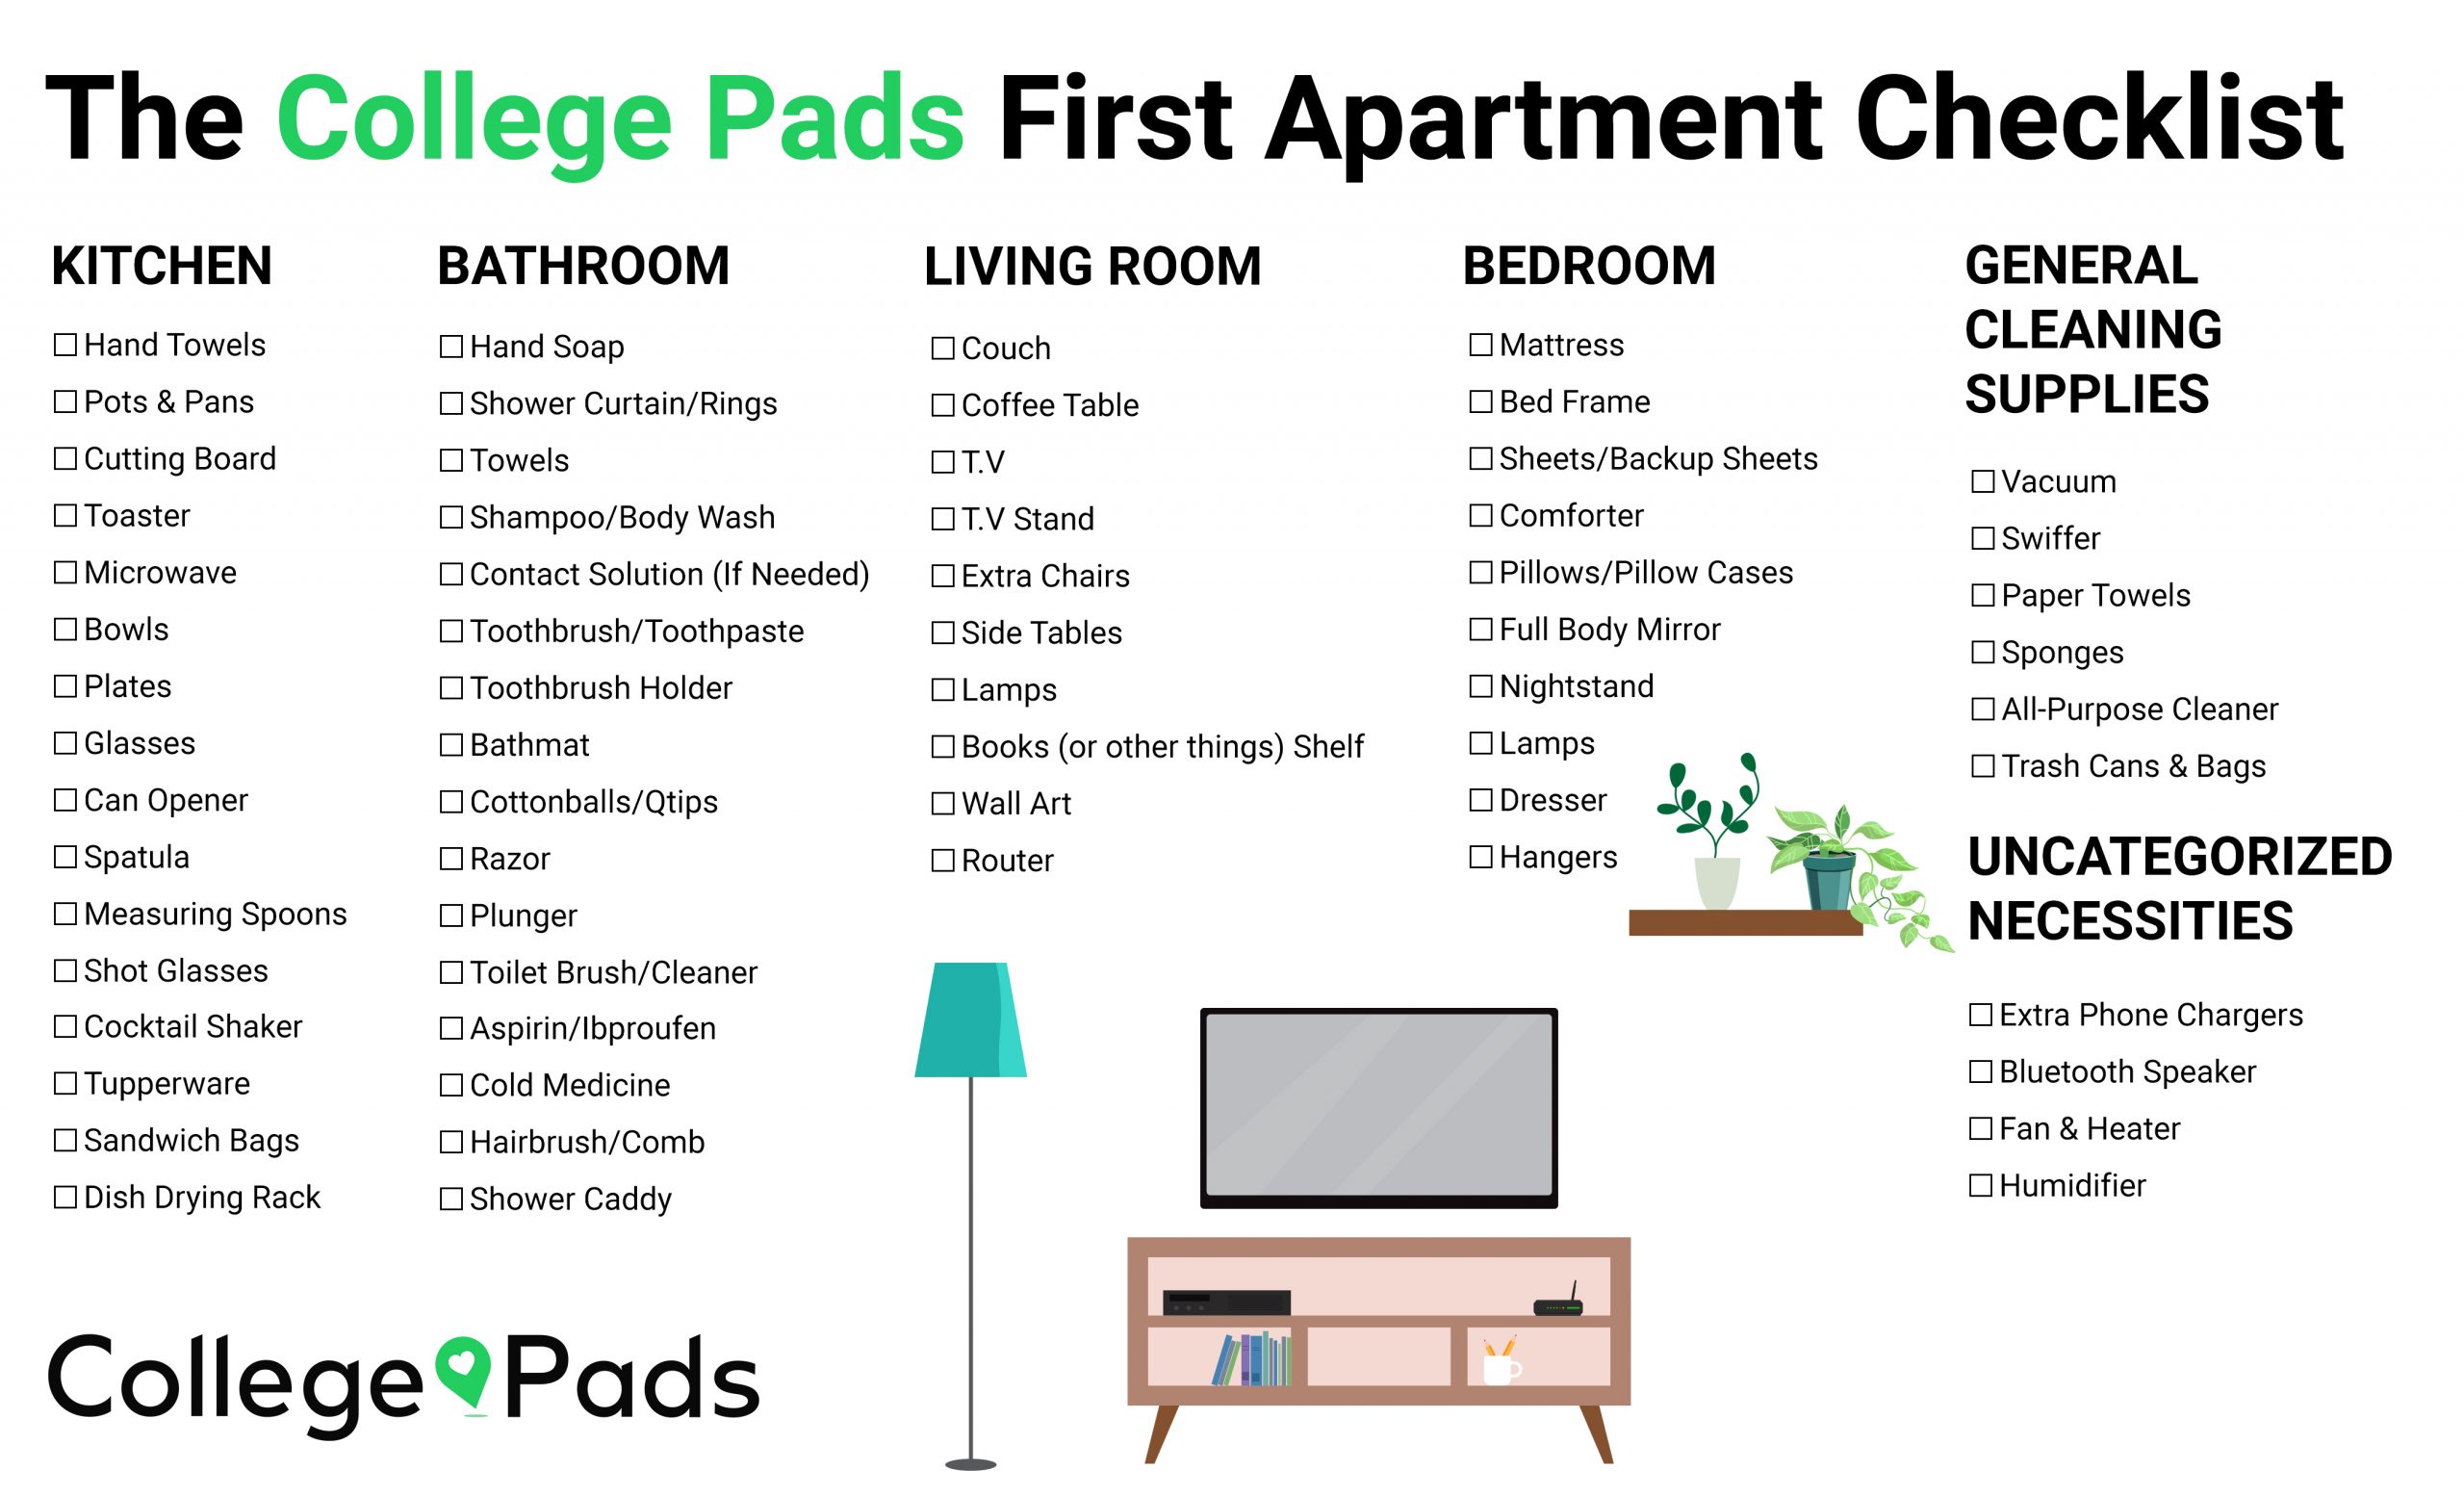 https://blog.rentcollegepads.com/wp-content/uploads/2020/08/first-apartment-checklist-3-scaled.jpg